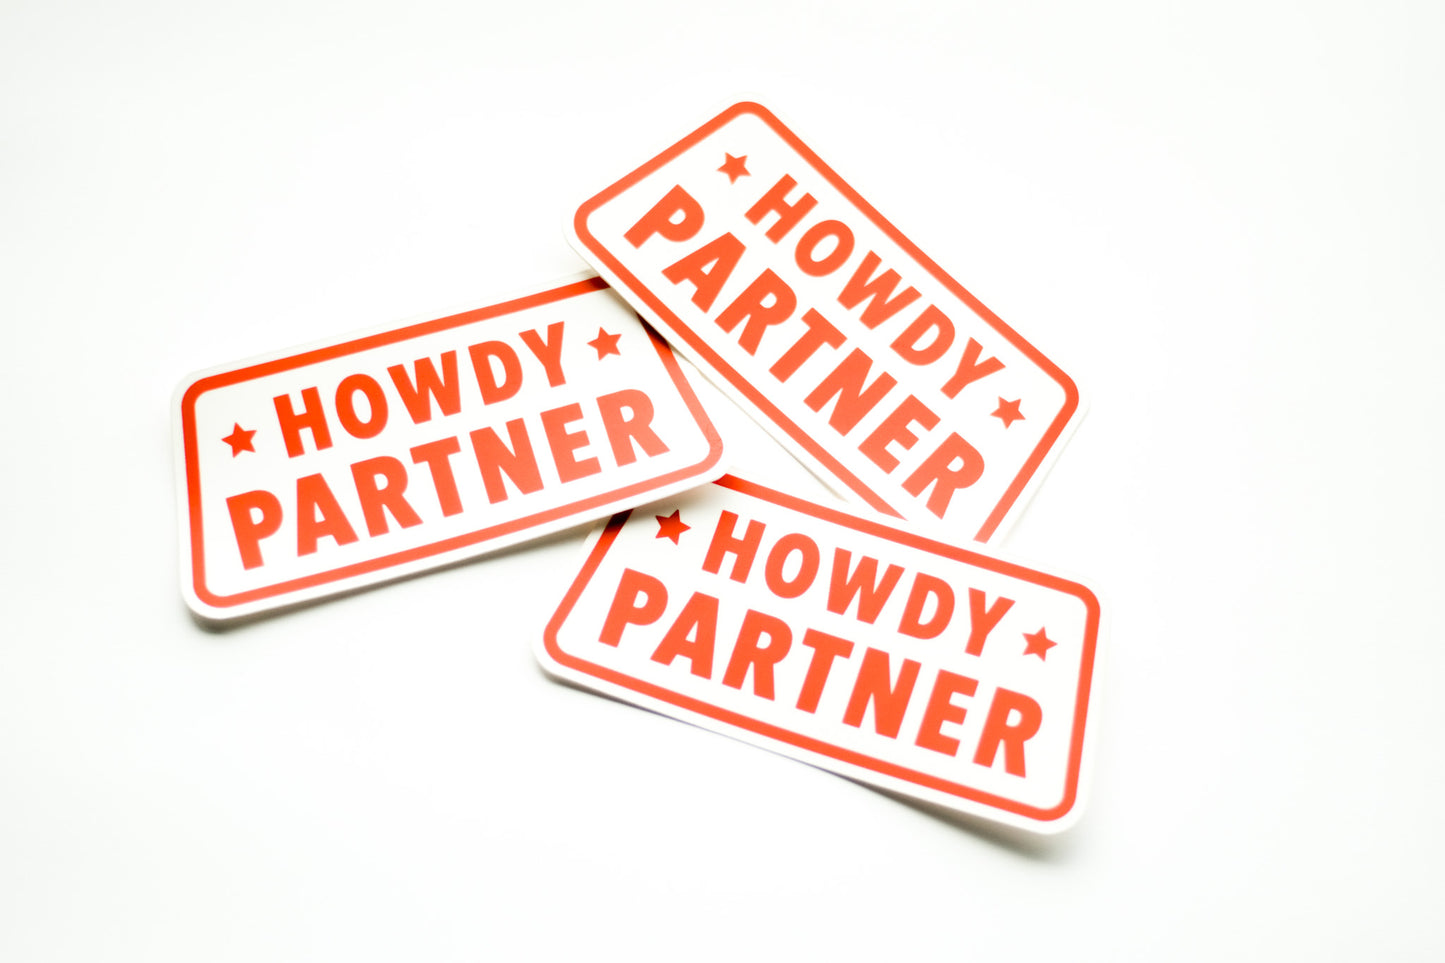 Howdy Partner vinyl sticker